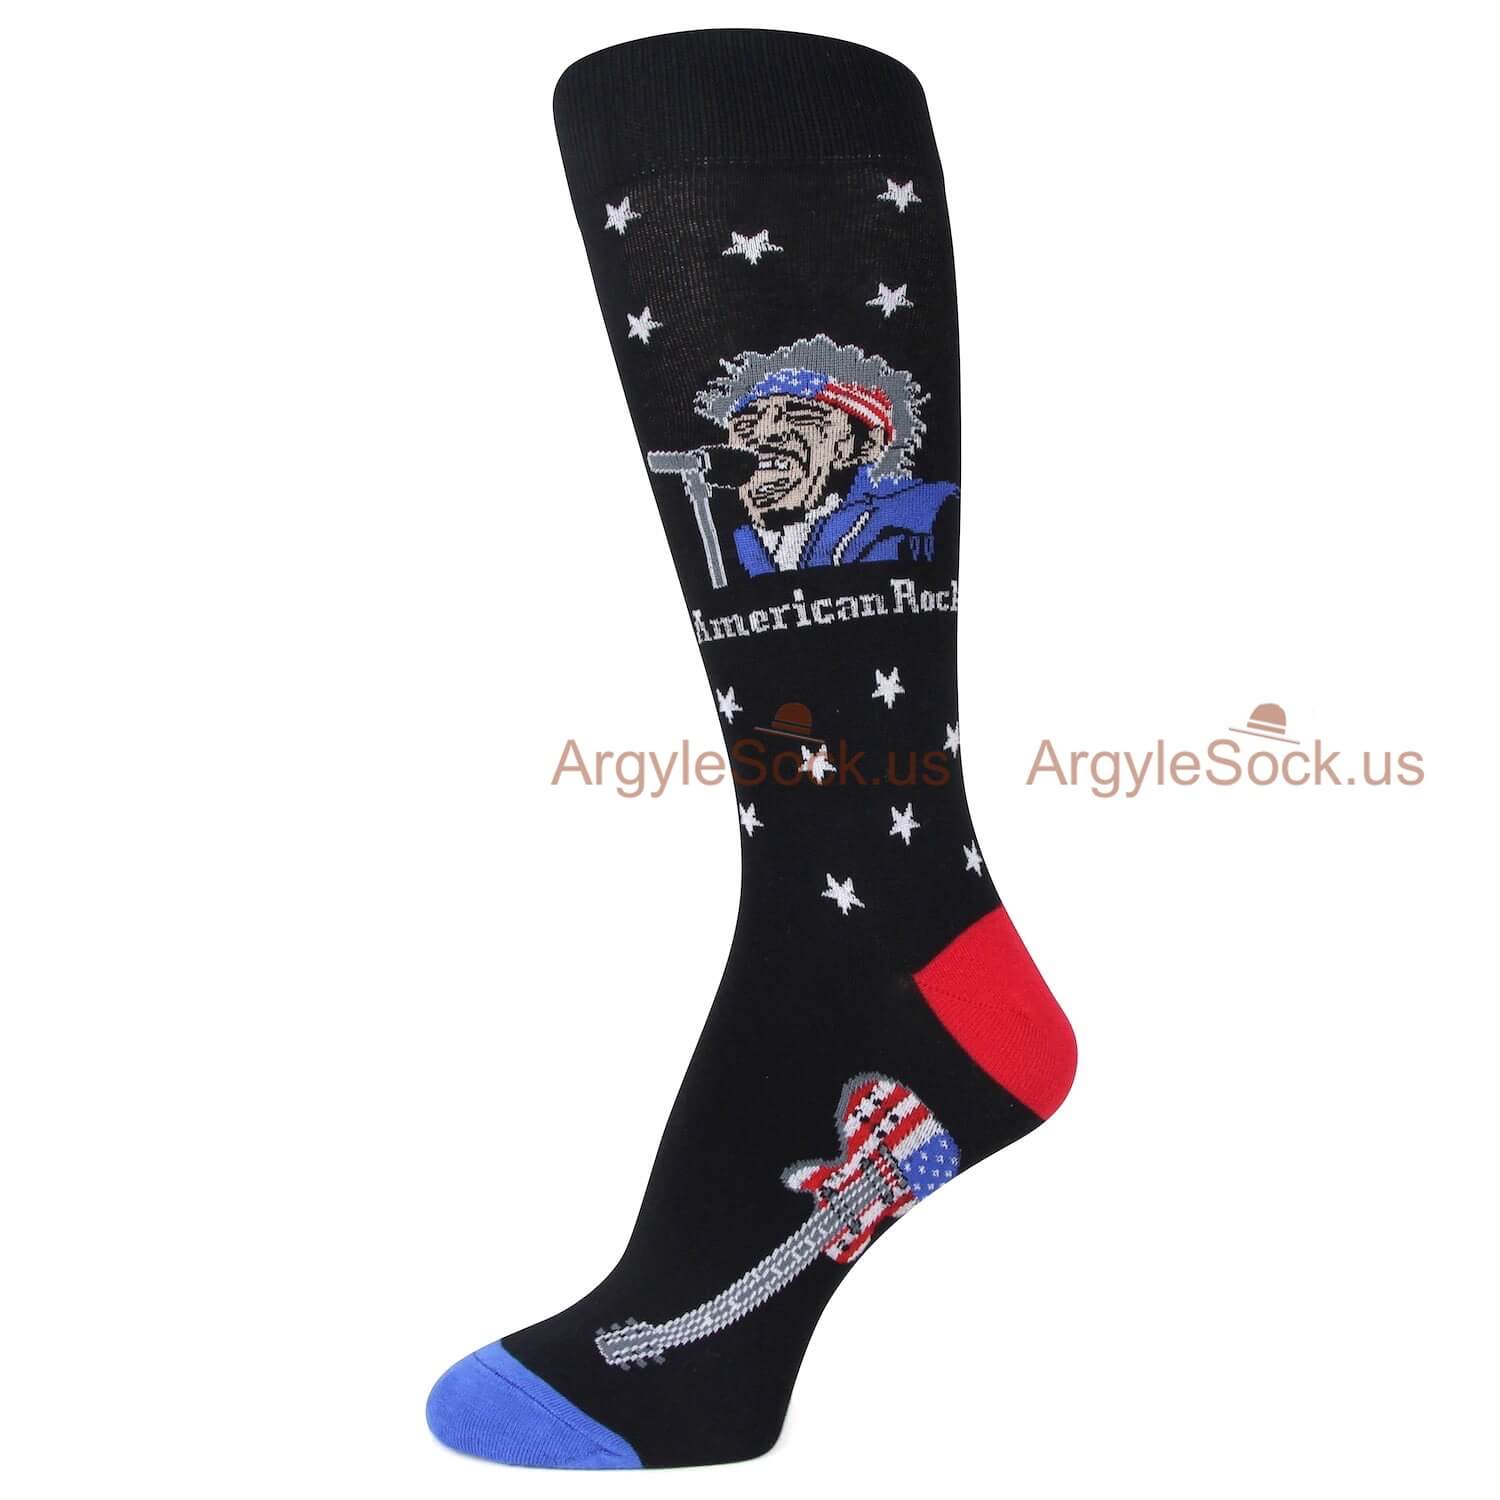 American Rock Band Themed Socks